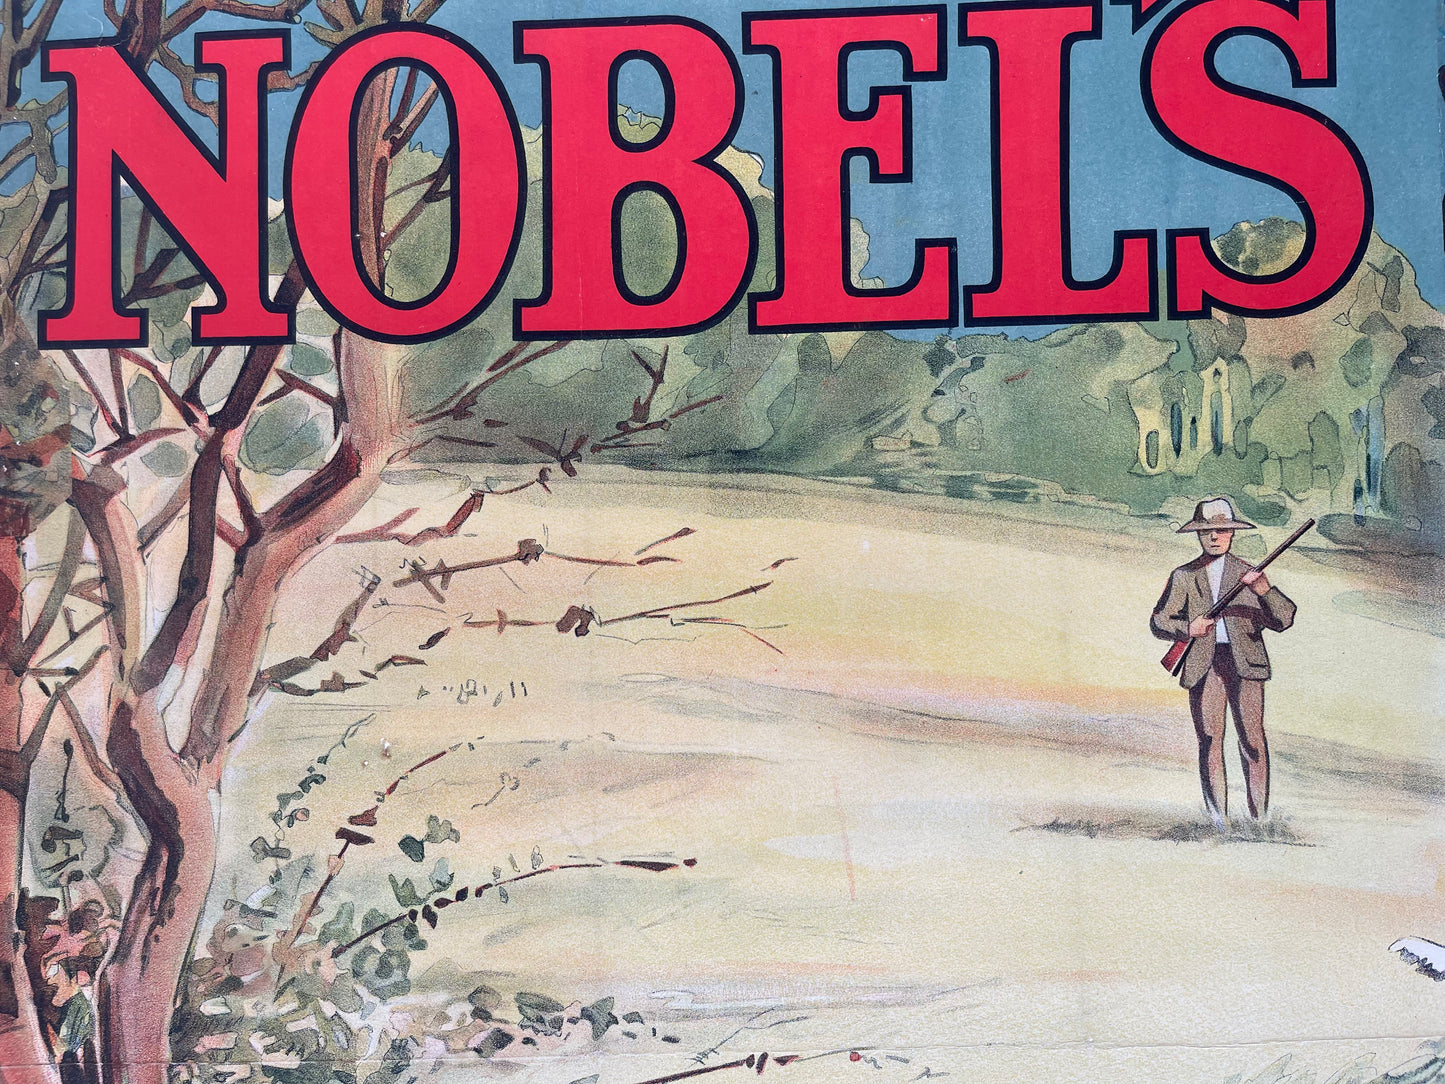 Nobel's Sporting Cartridges Advert